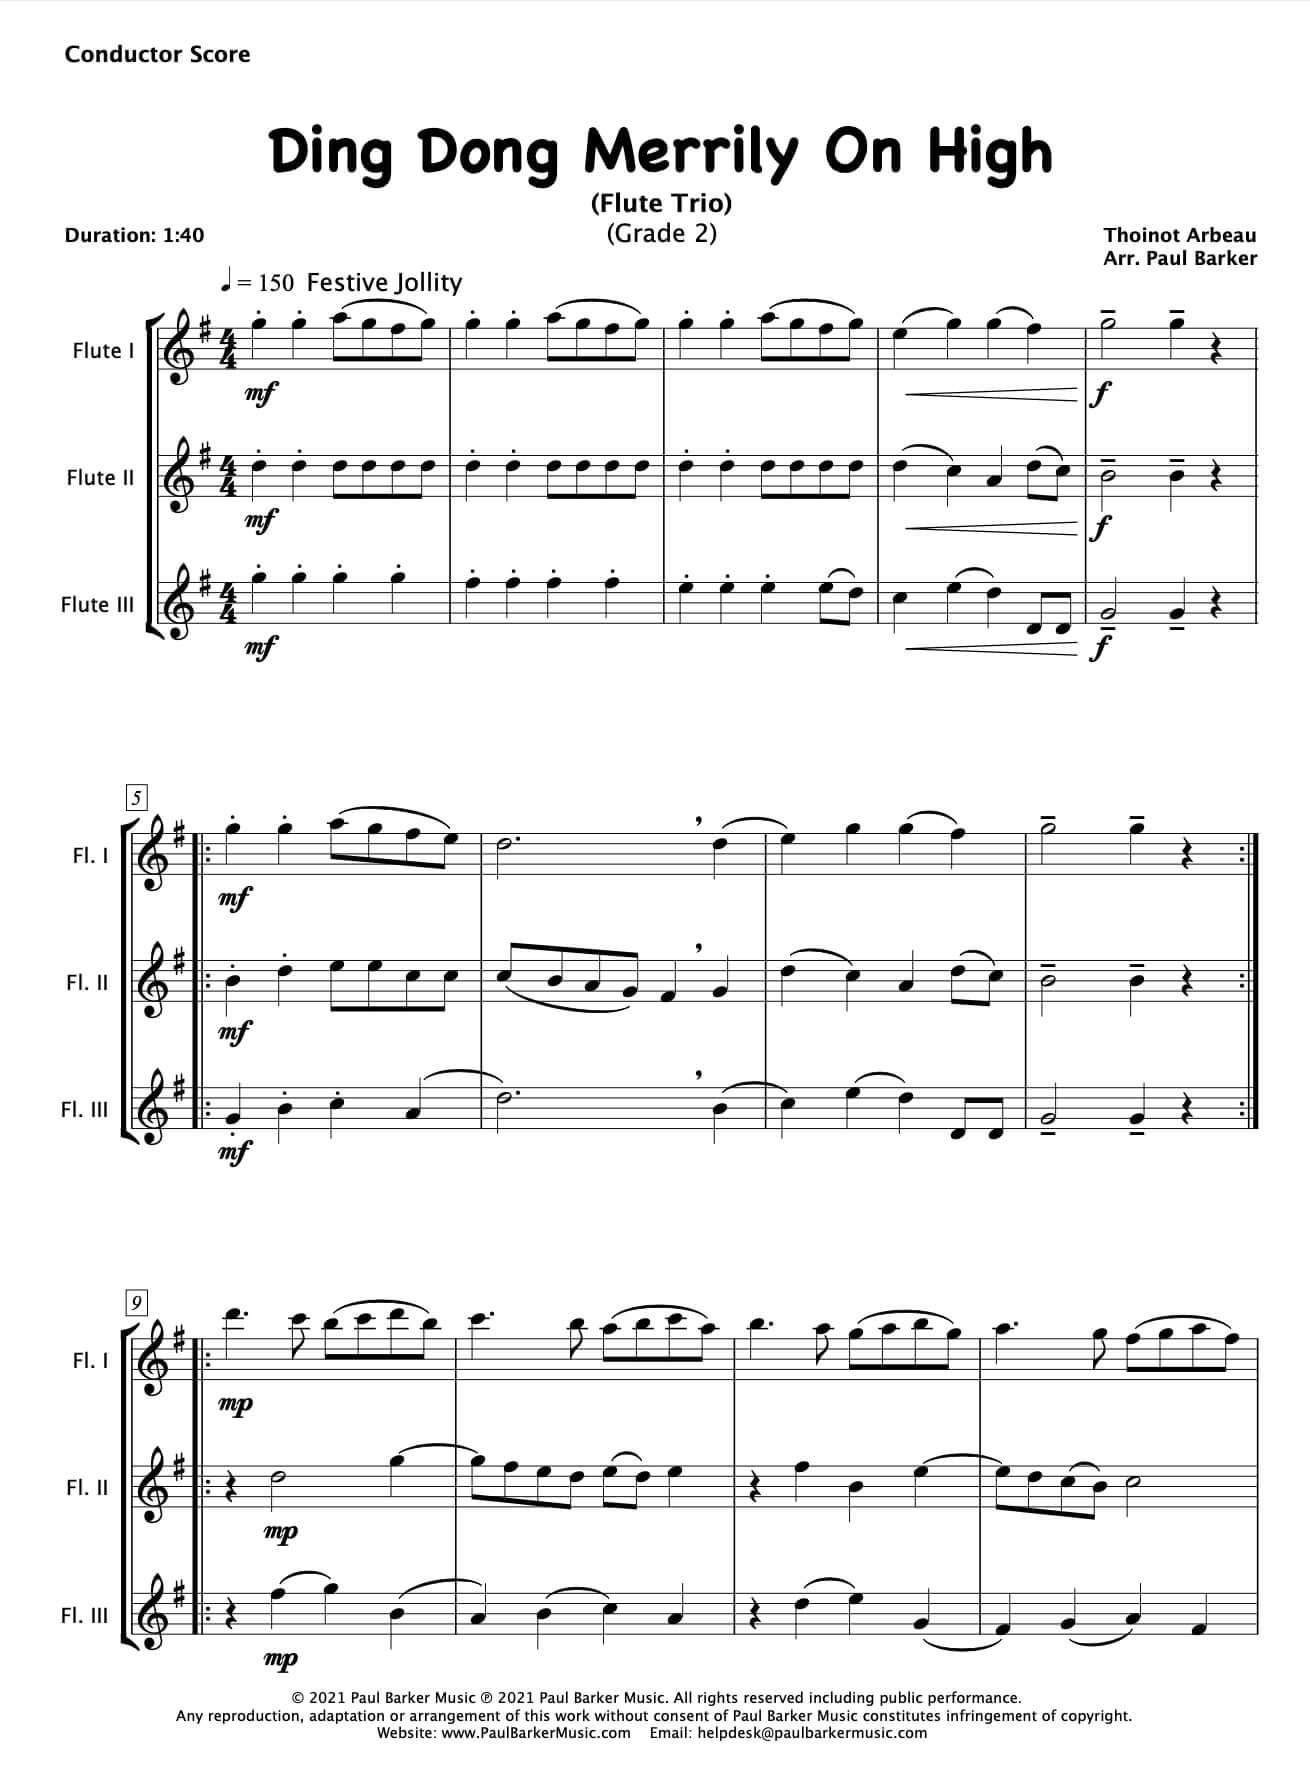 Ding Dong Merrily On High (Flute Trio) - Paul Barker Music 